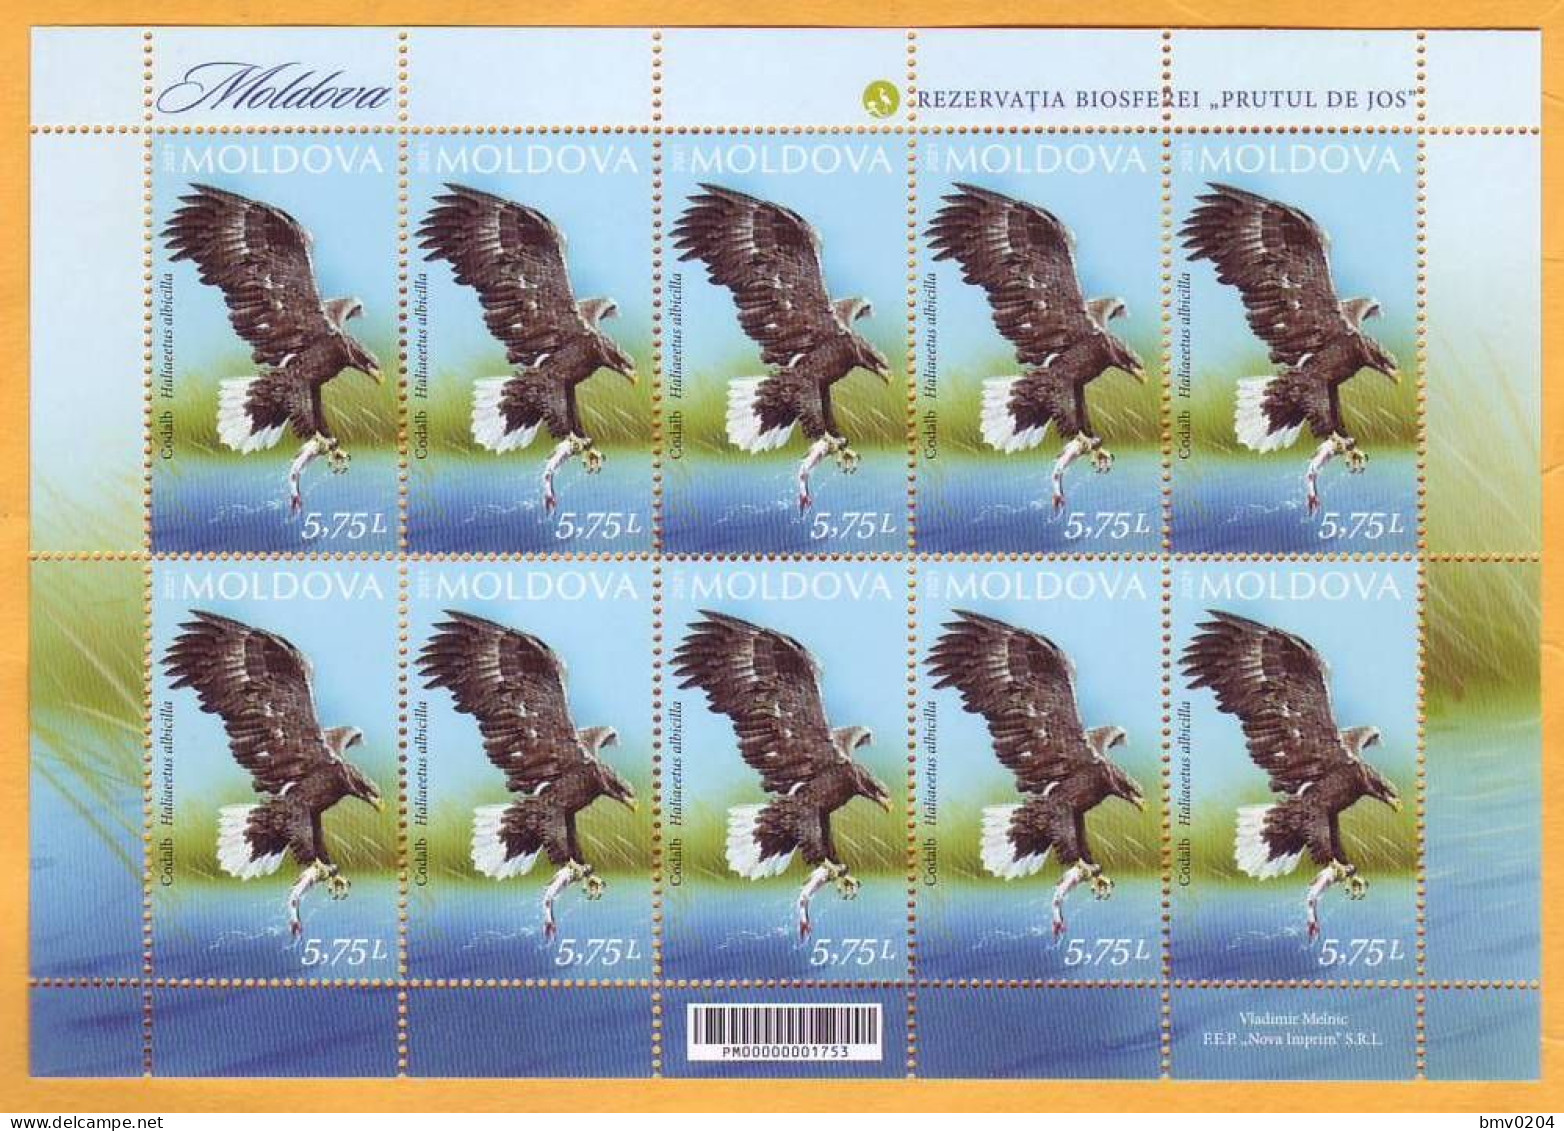 2021 Moldova Moldavie Moldau Romania  Sheet  Lower Prut ”Biosphere Reserve” Birds, Fauna Mint 5.75 - Moldawien (Moldau)